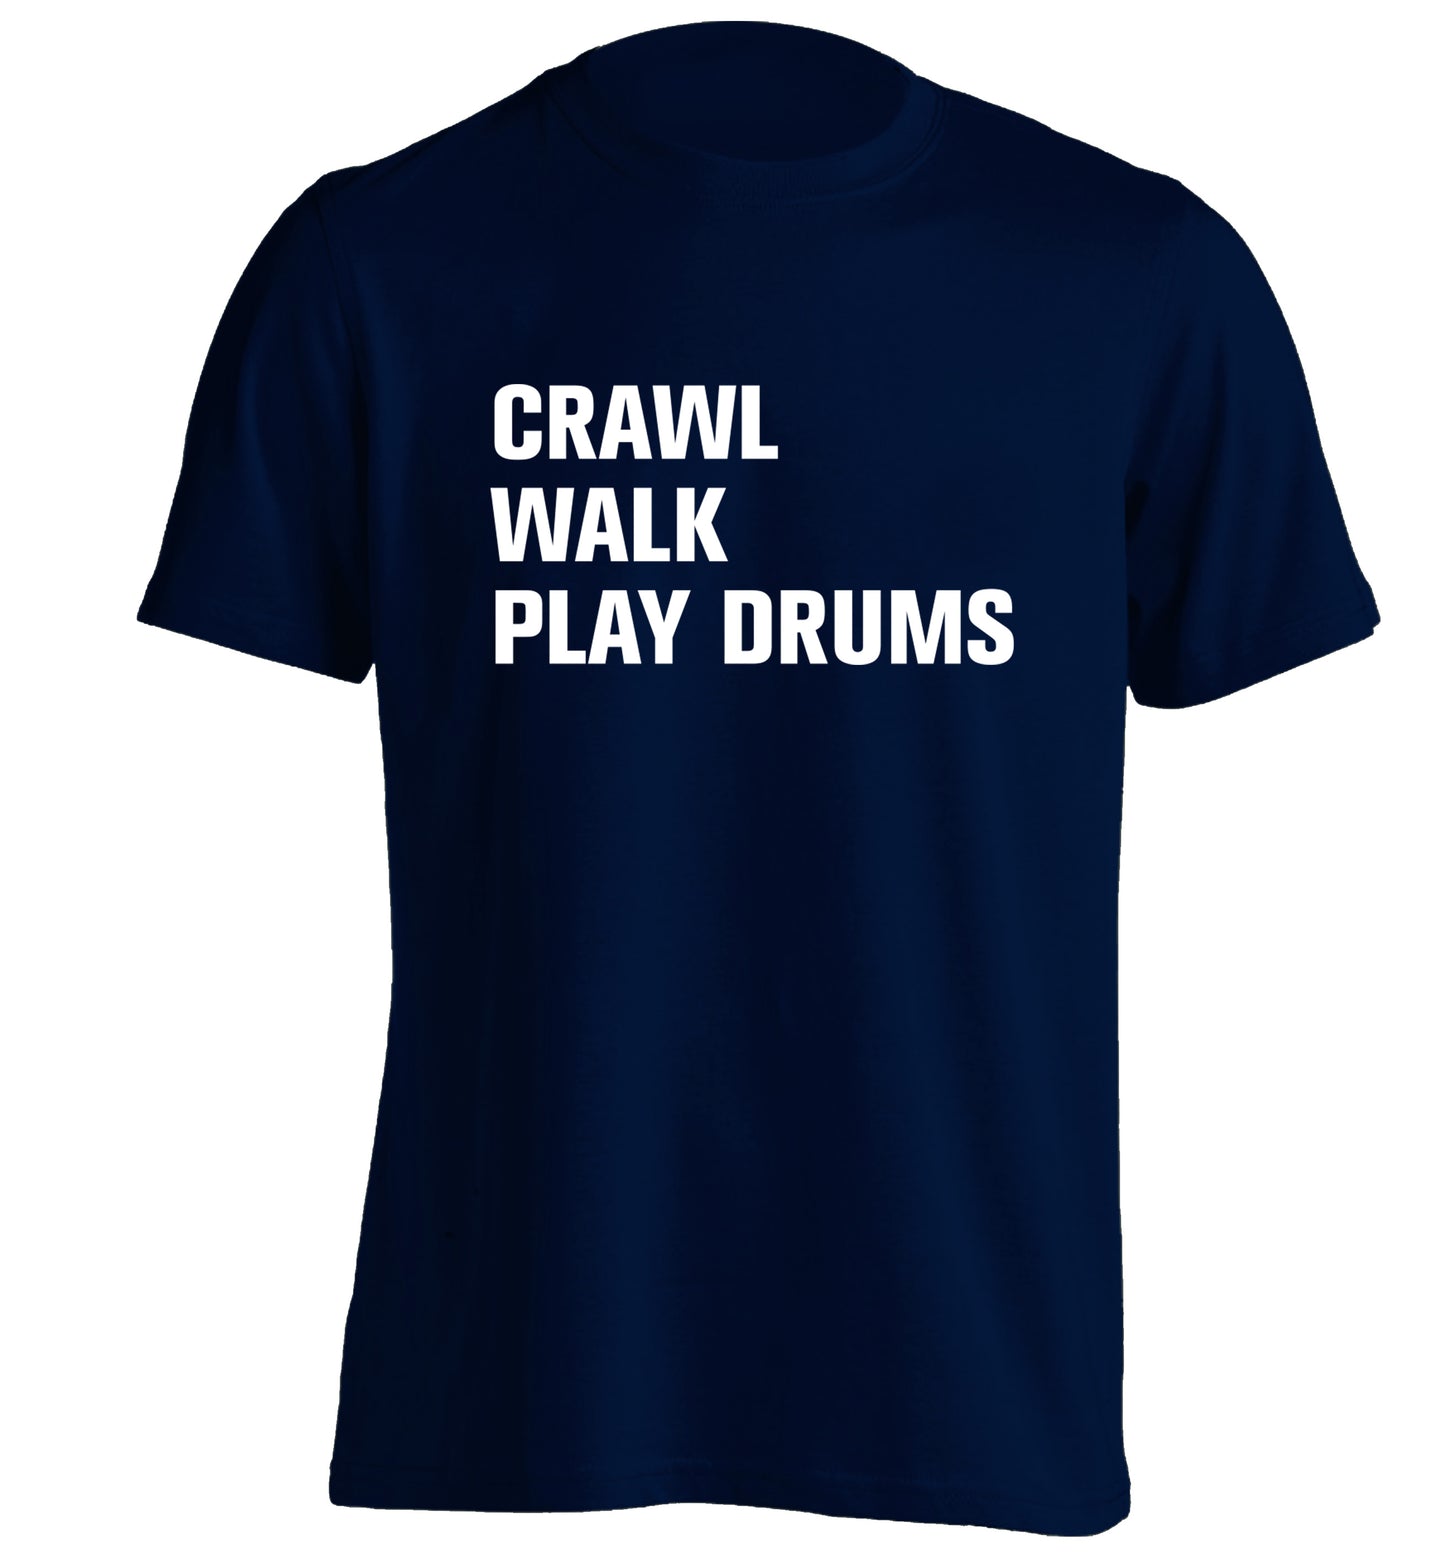 Crawl walk play drums adults unisex navy Tshirt 2XL